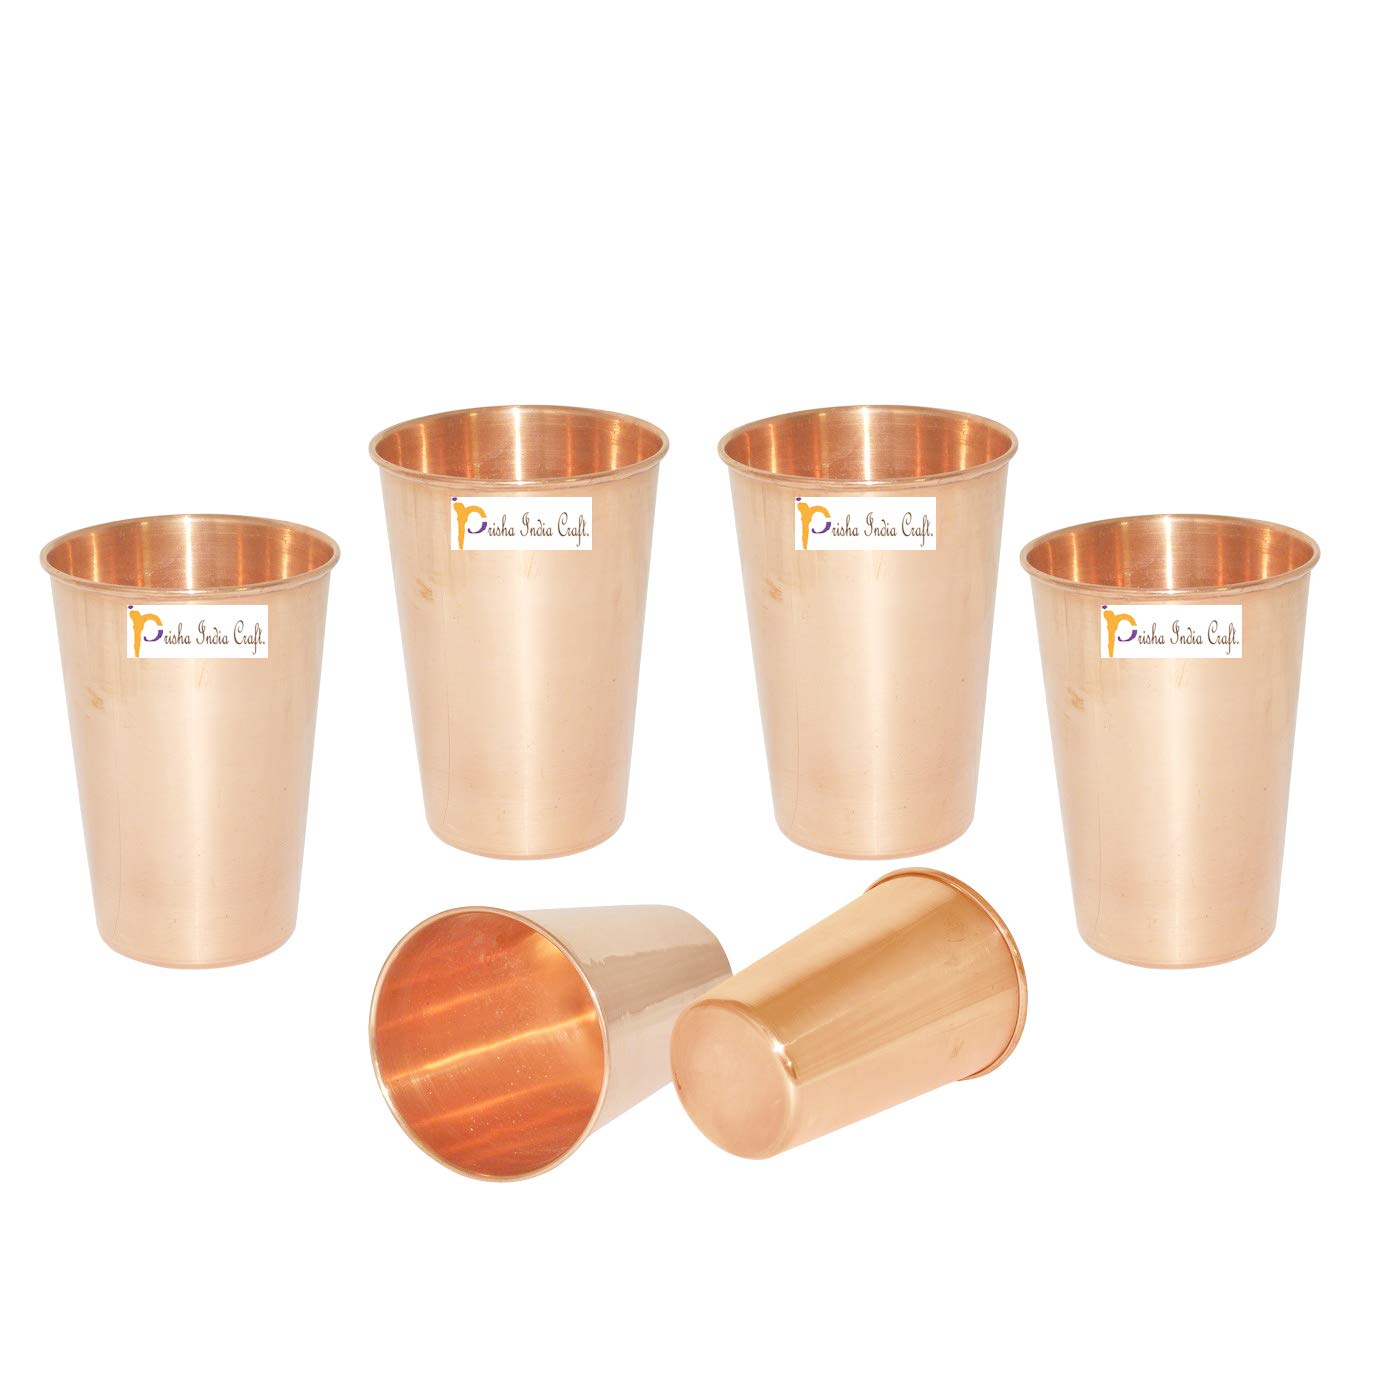 Prisha India Craft Copper Glass Ayurvedic Drinkware Tumbler, 400 Ml, Set of 6, Brown, Standard